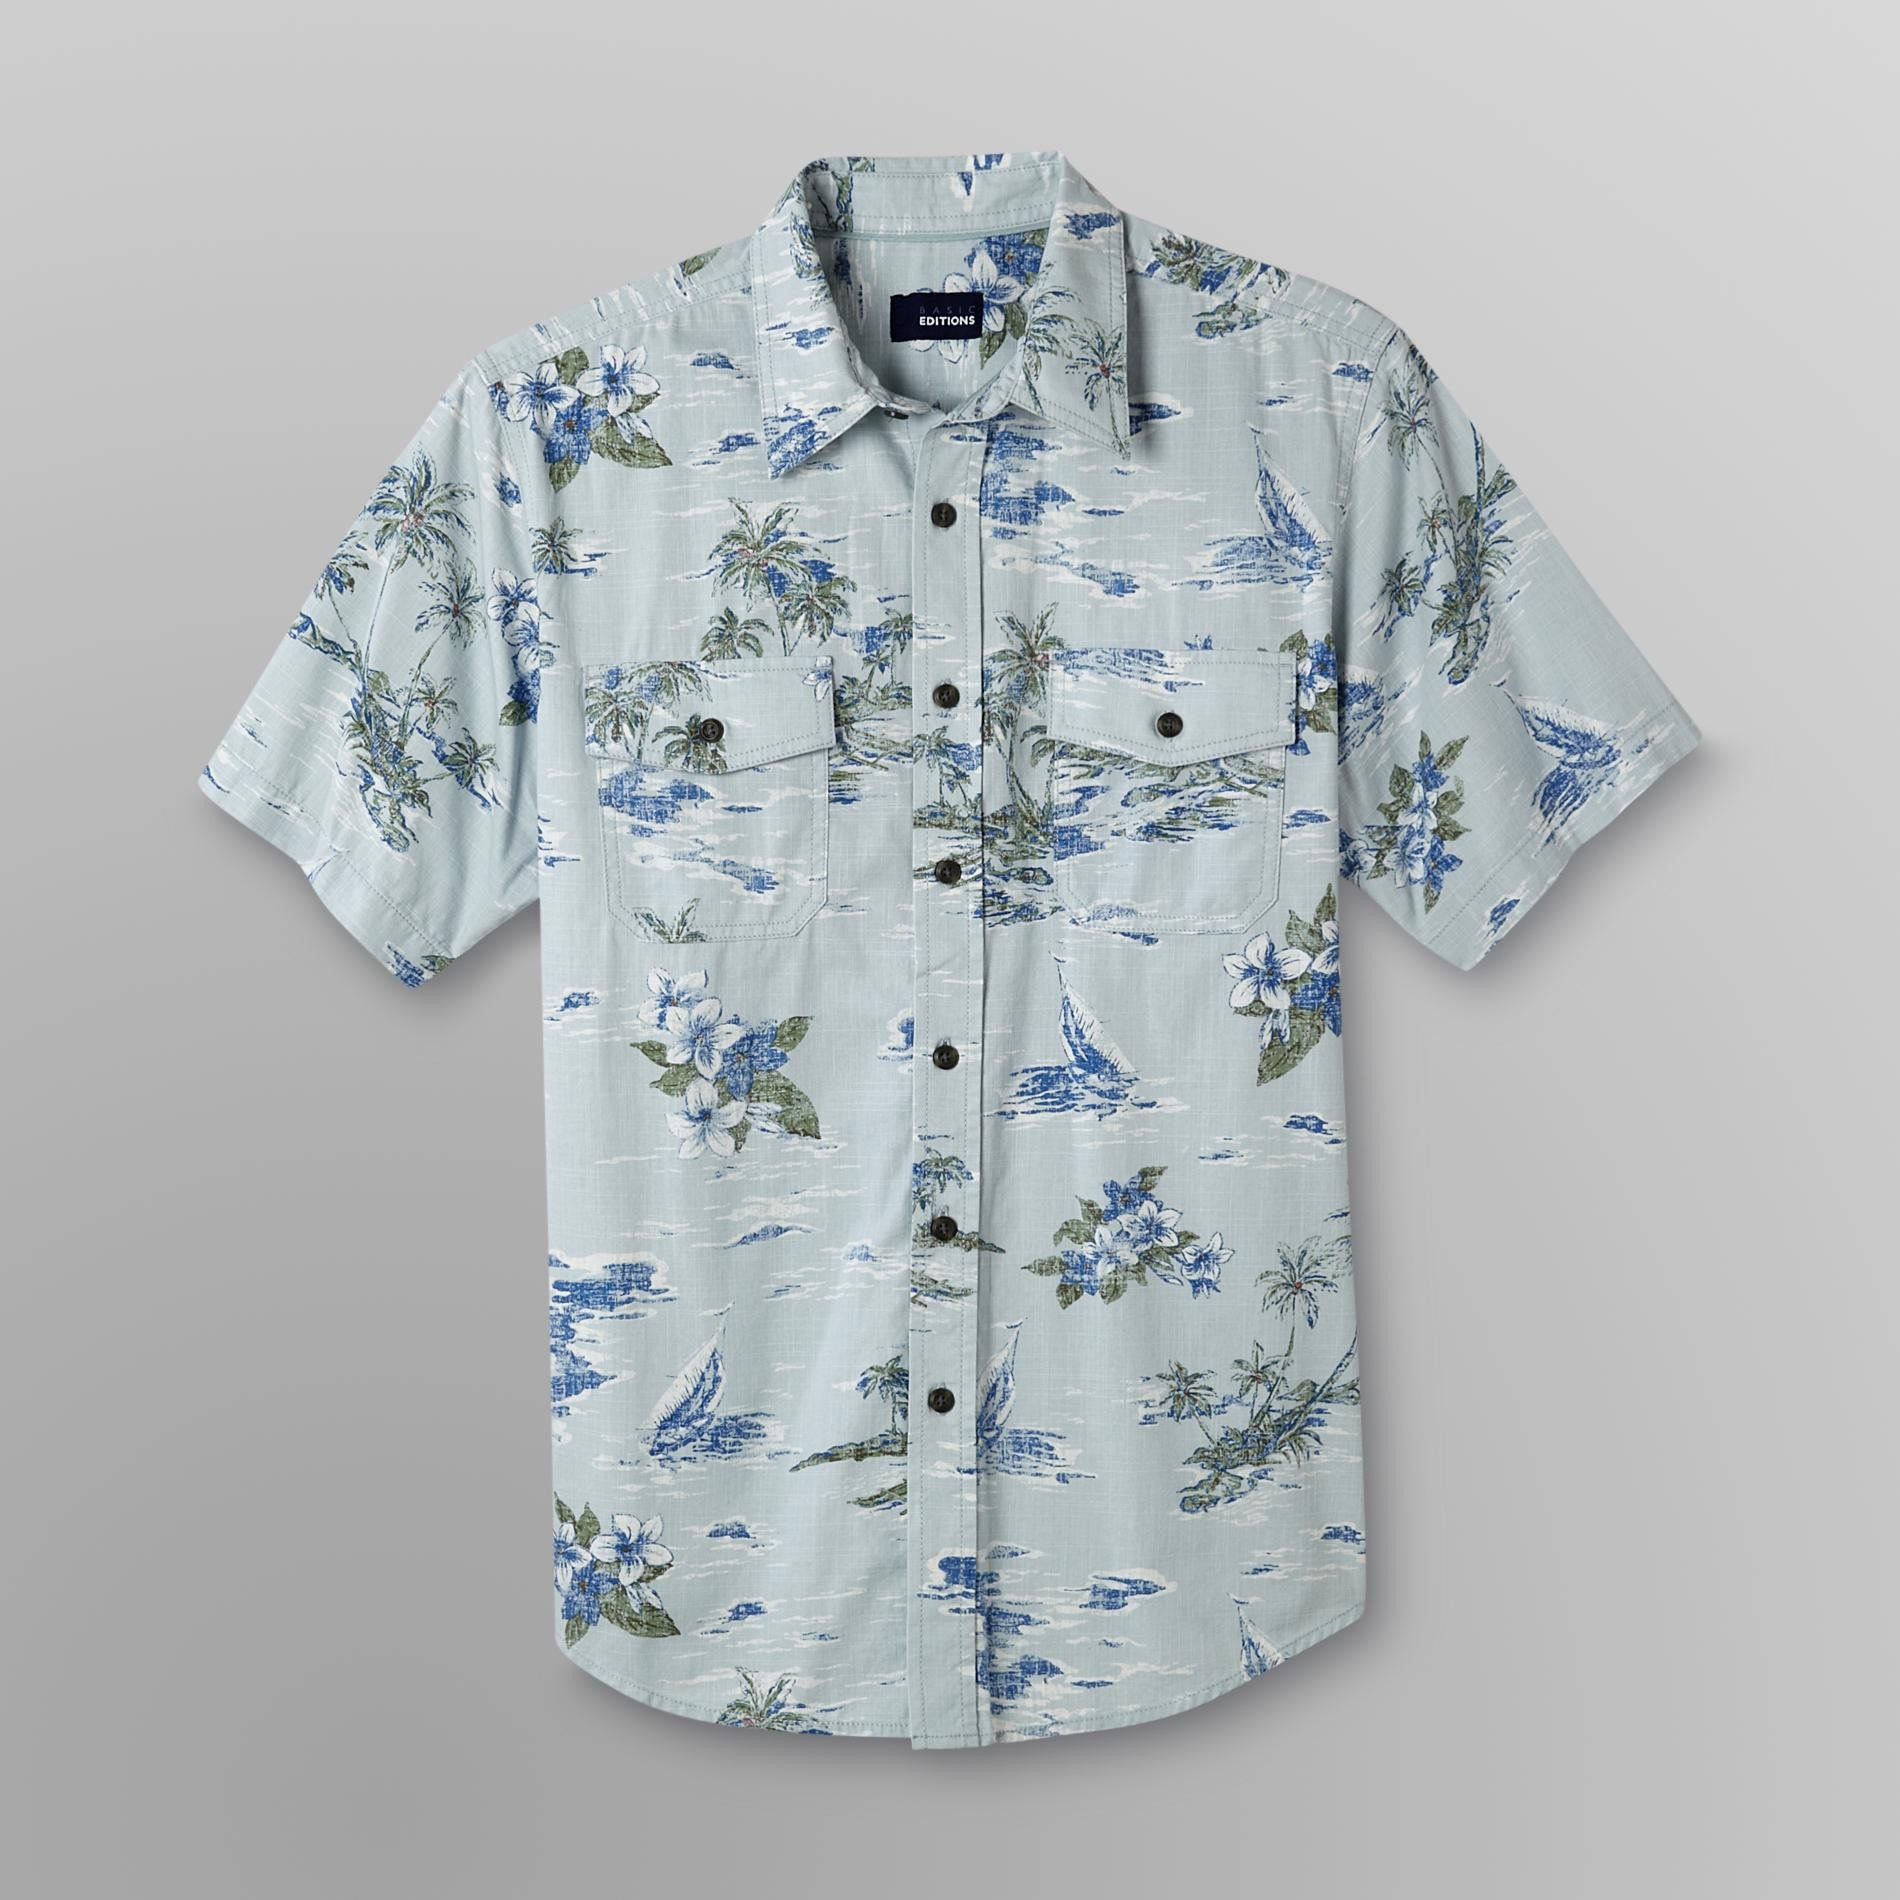 Basic Editions Men's Big & Tall Short-Sleeve Shirt - Tropical Print